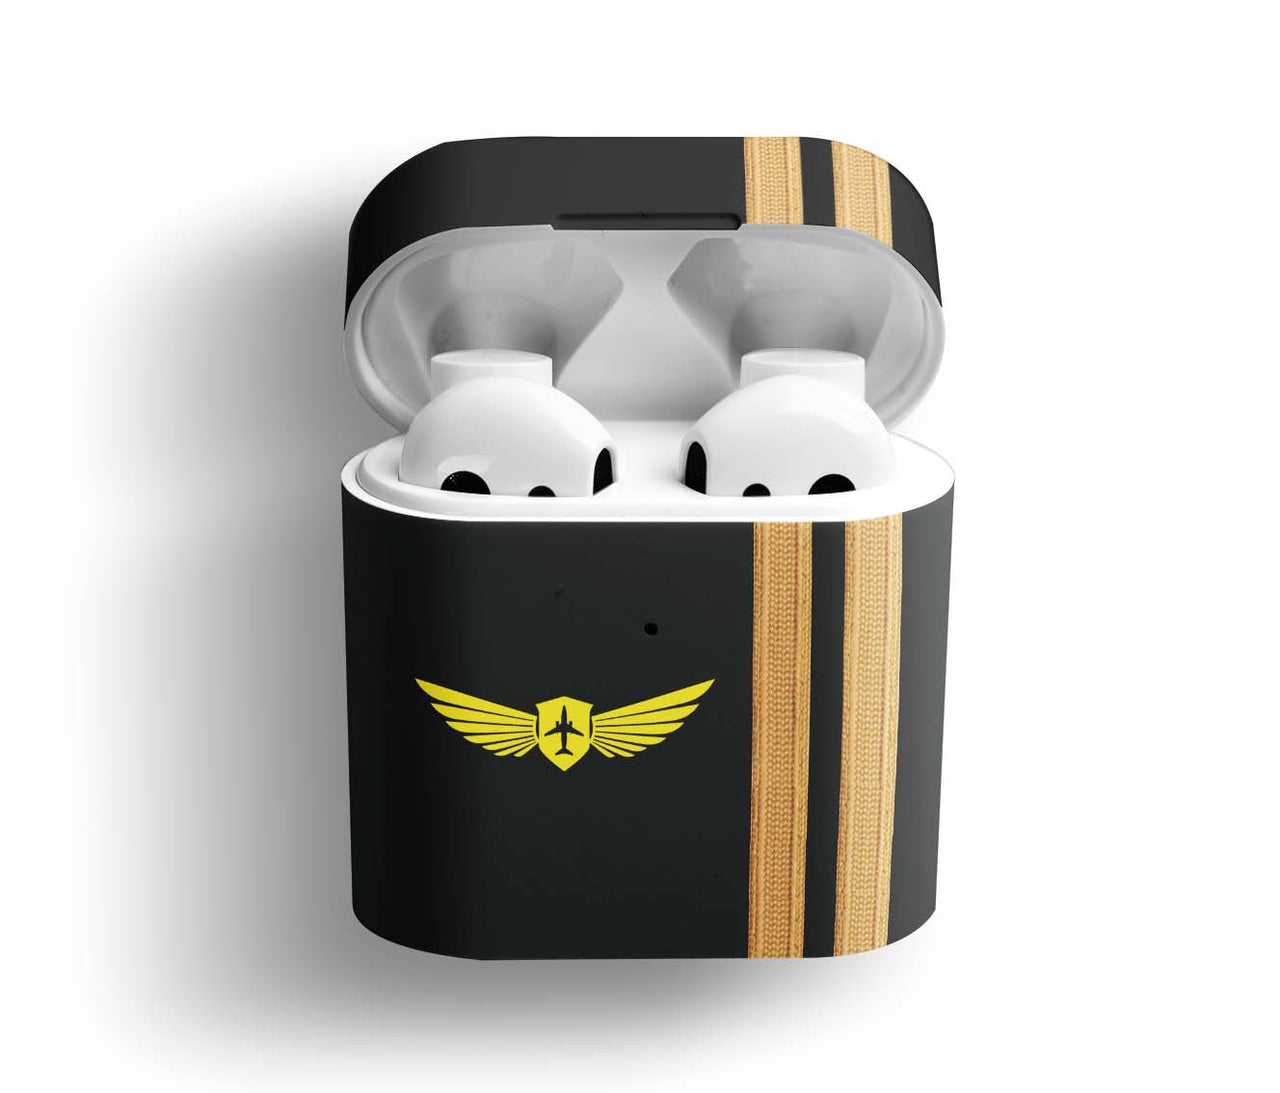 Pilot Badge & Special Golden Epaulettes (4,3,2 Lines) Designed AirPods Cases